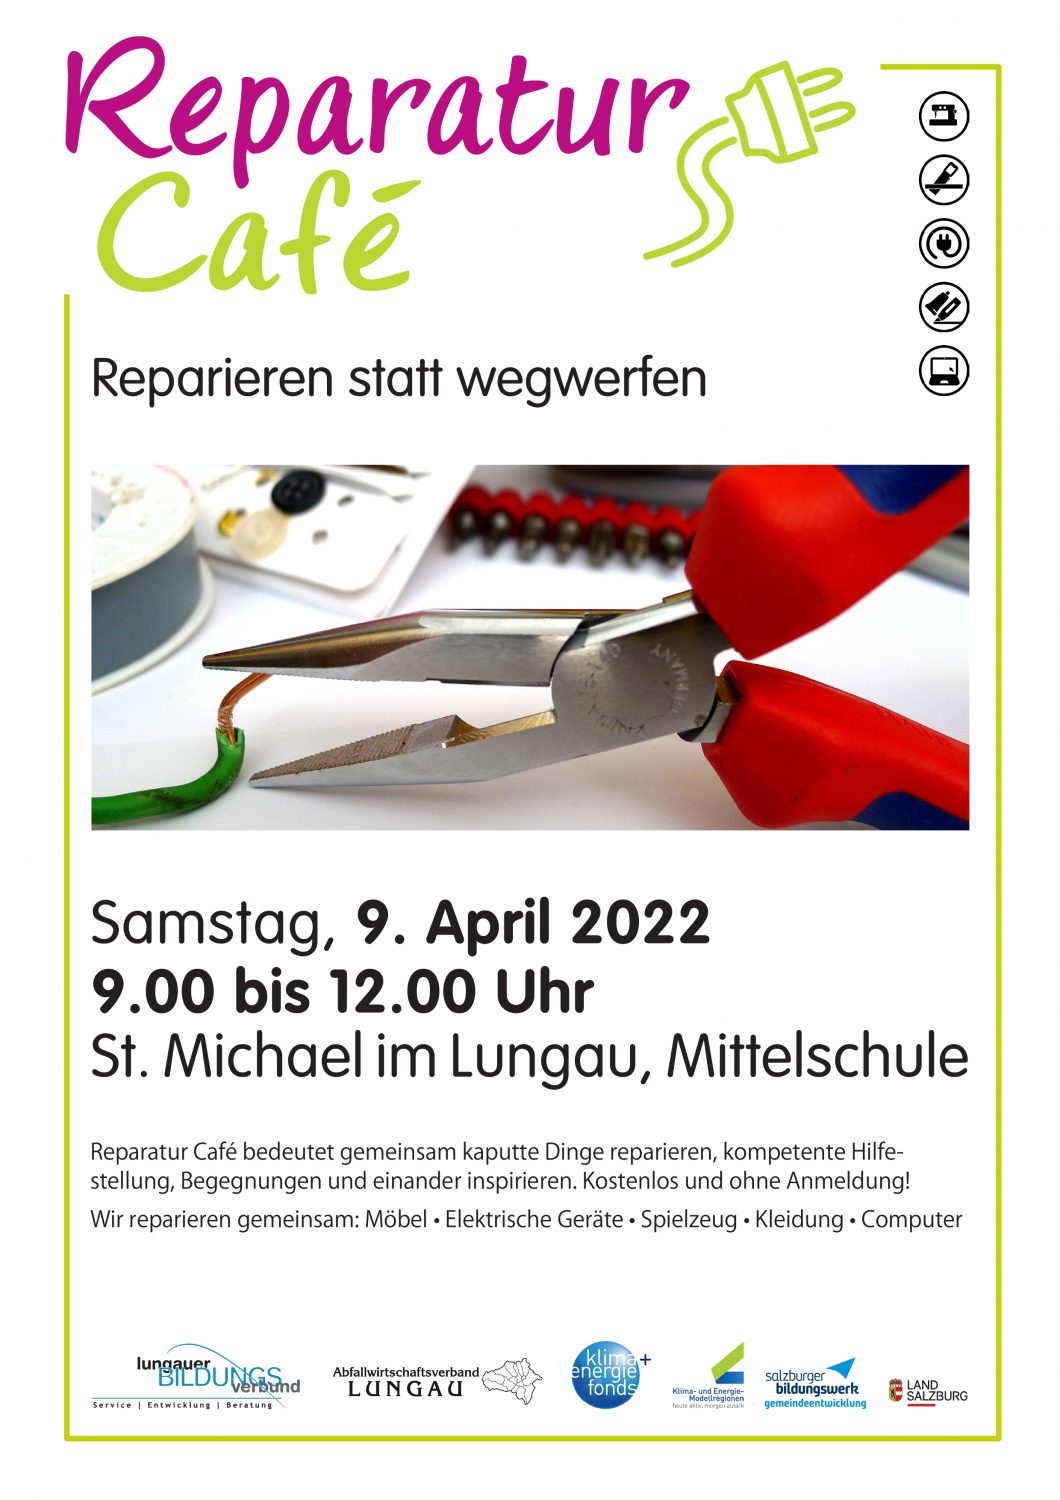 Reperatur Café - reparieren statt wegwerfen am 09. April 2022